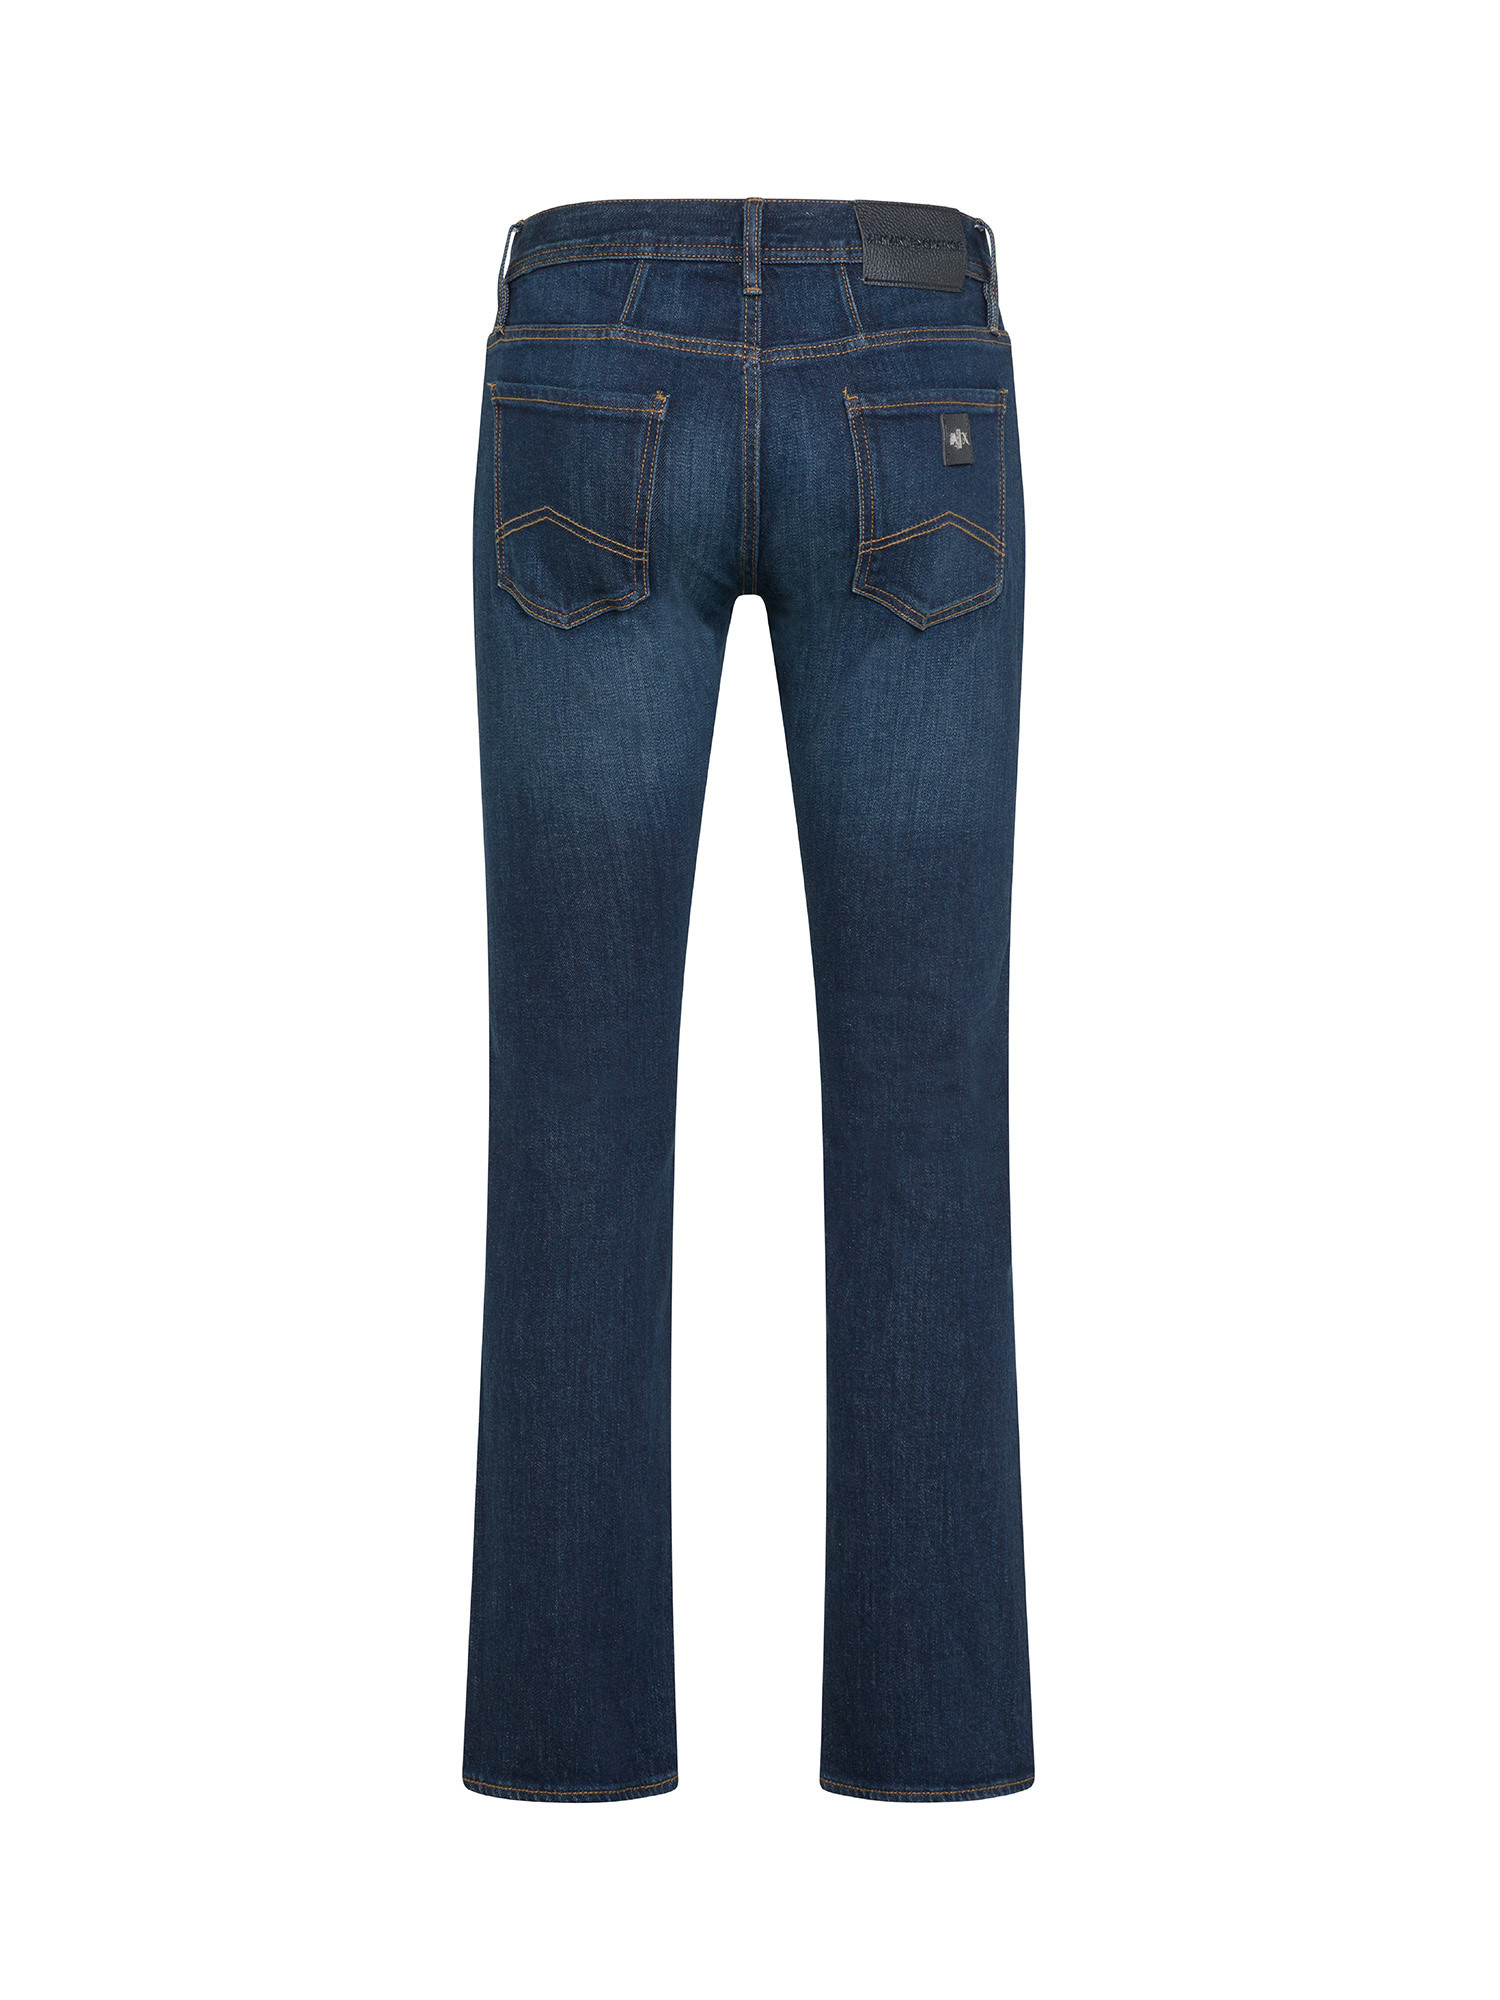 Armani Exchange - Jeans cinque tasche slim fit, Blu scuro, large image number 1